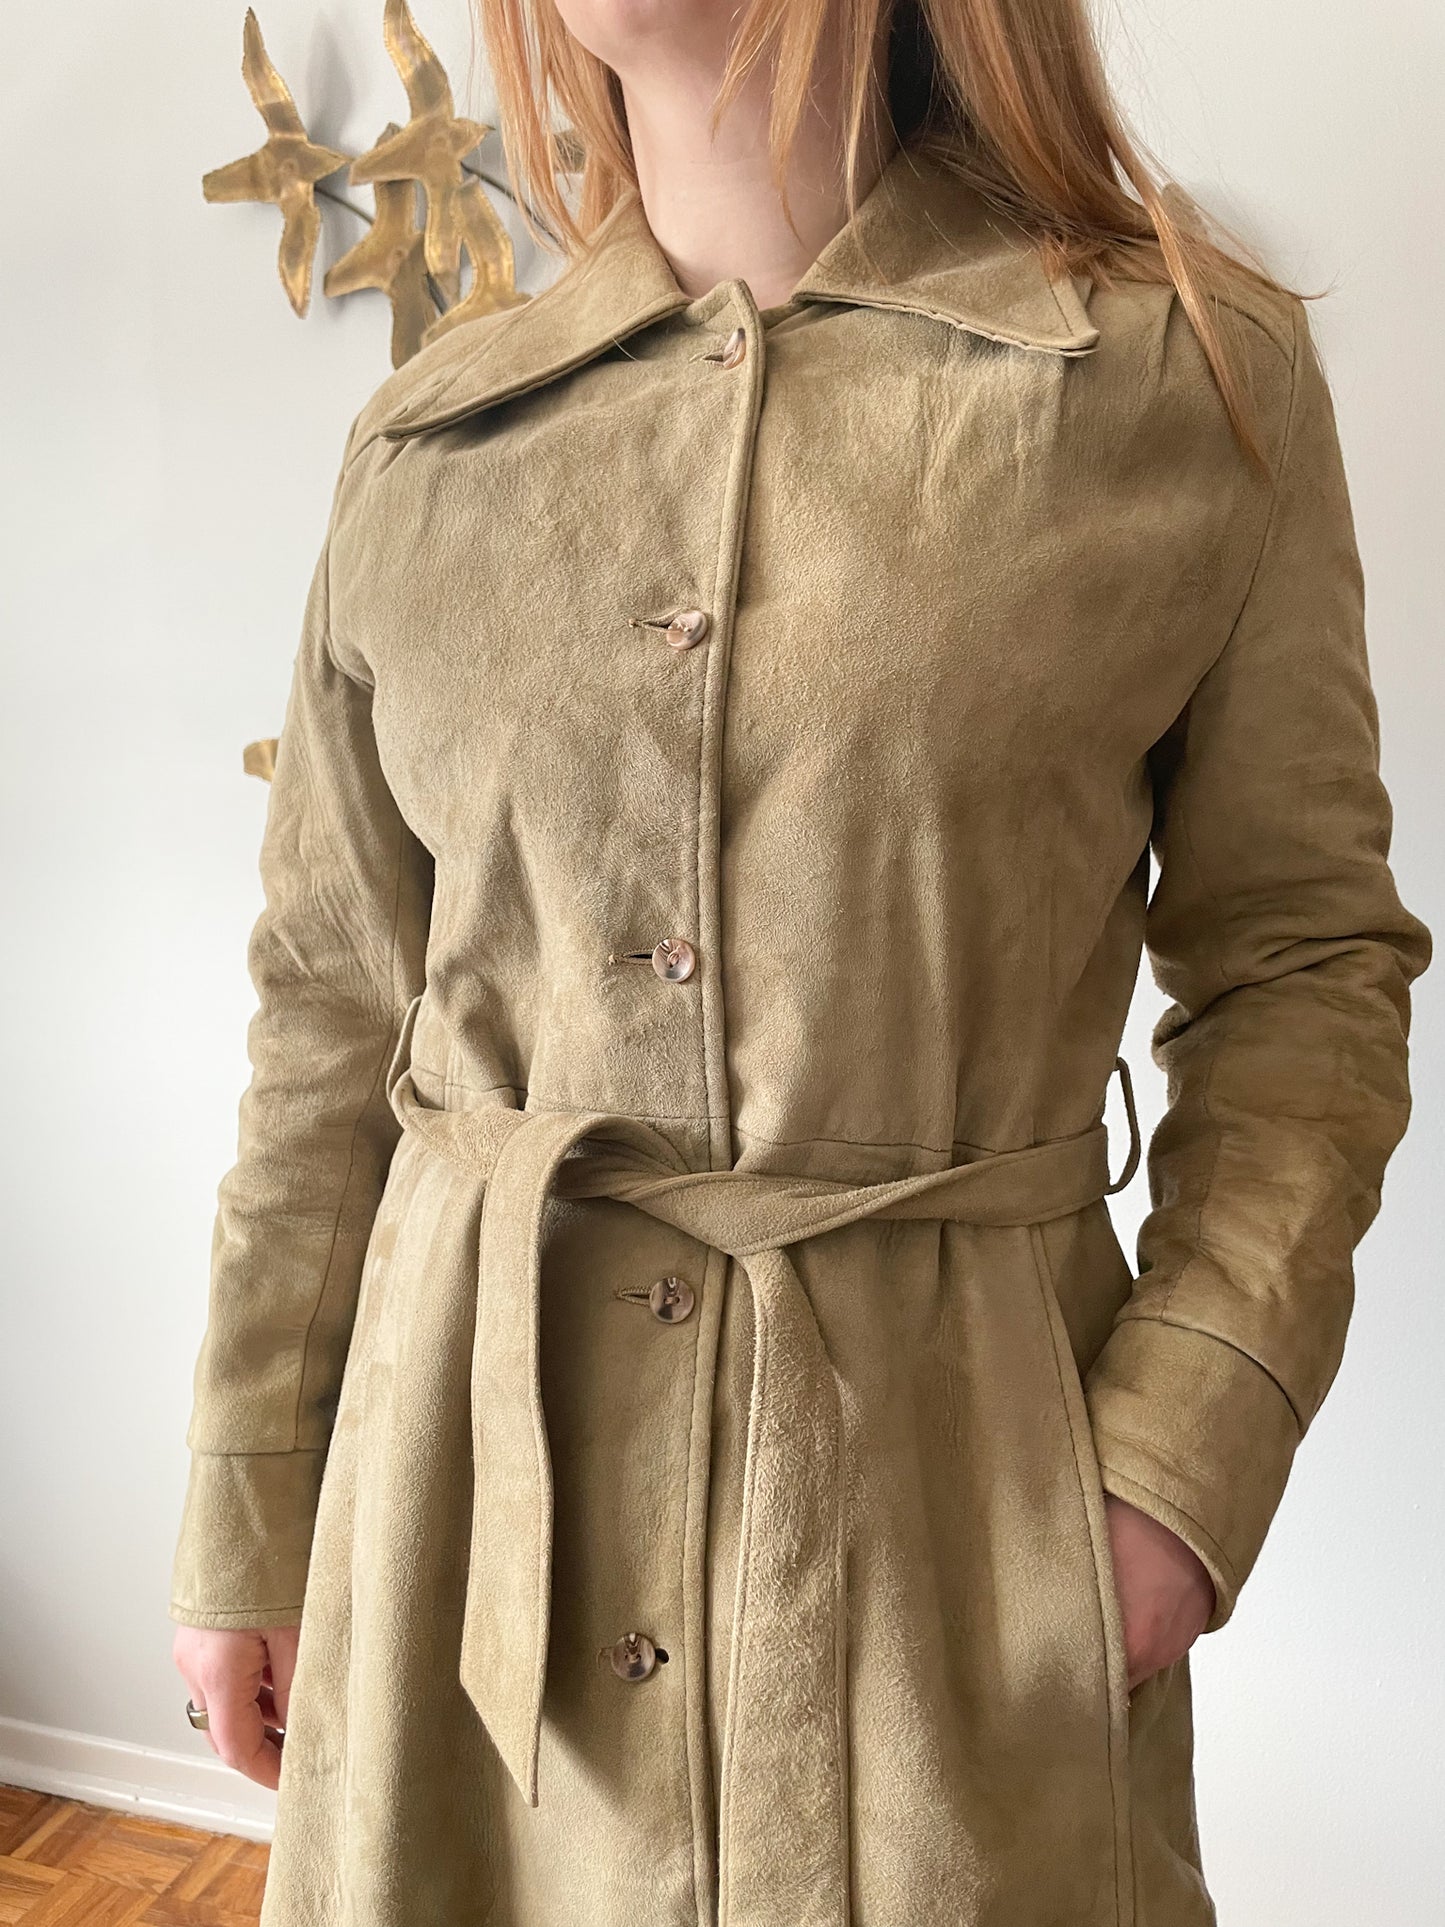 JJ Vintage Beige Suede Trench Dress Jacket - Small